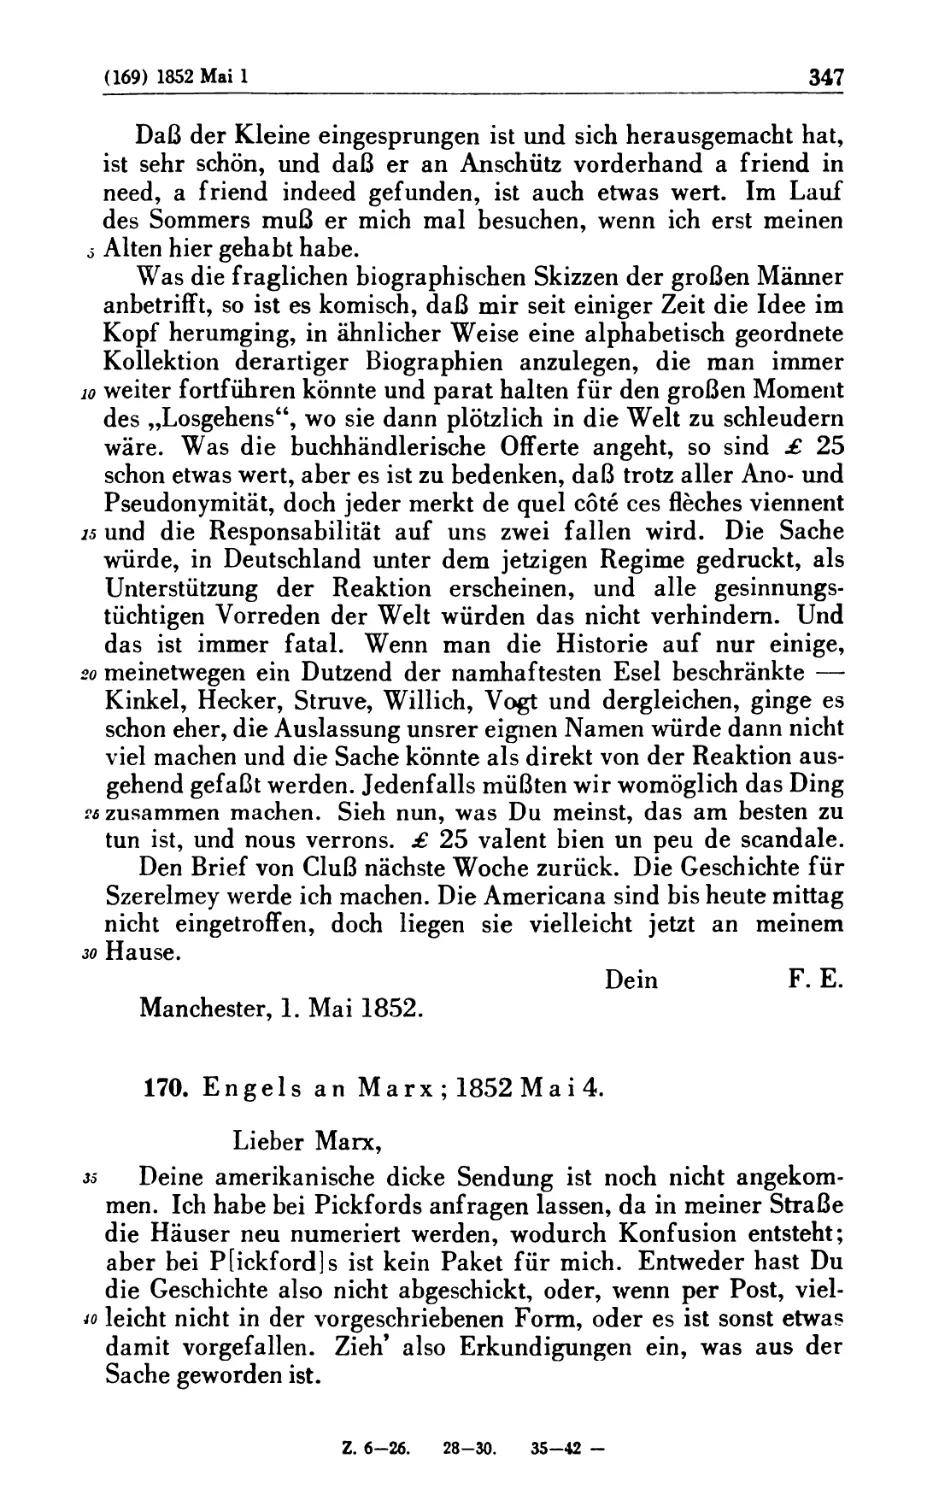 170. Engels an Marx; 1852 Mai 4